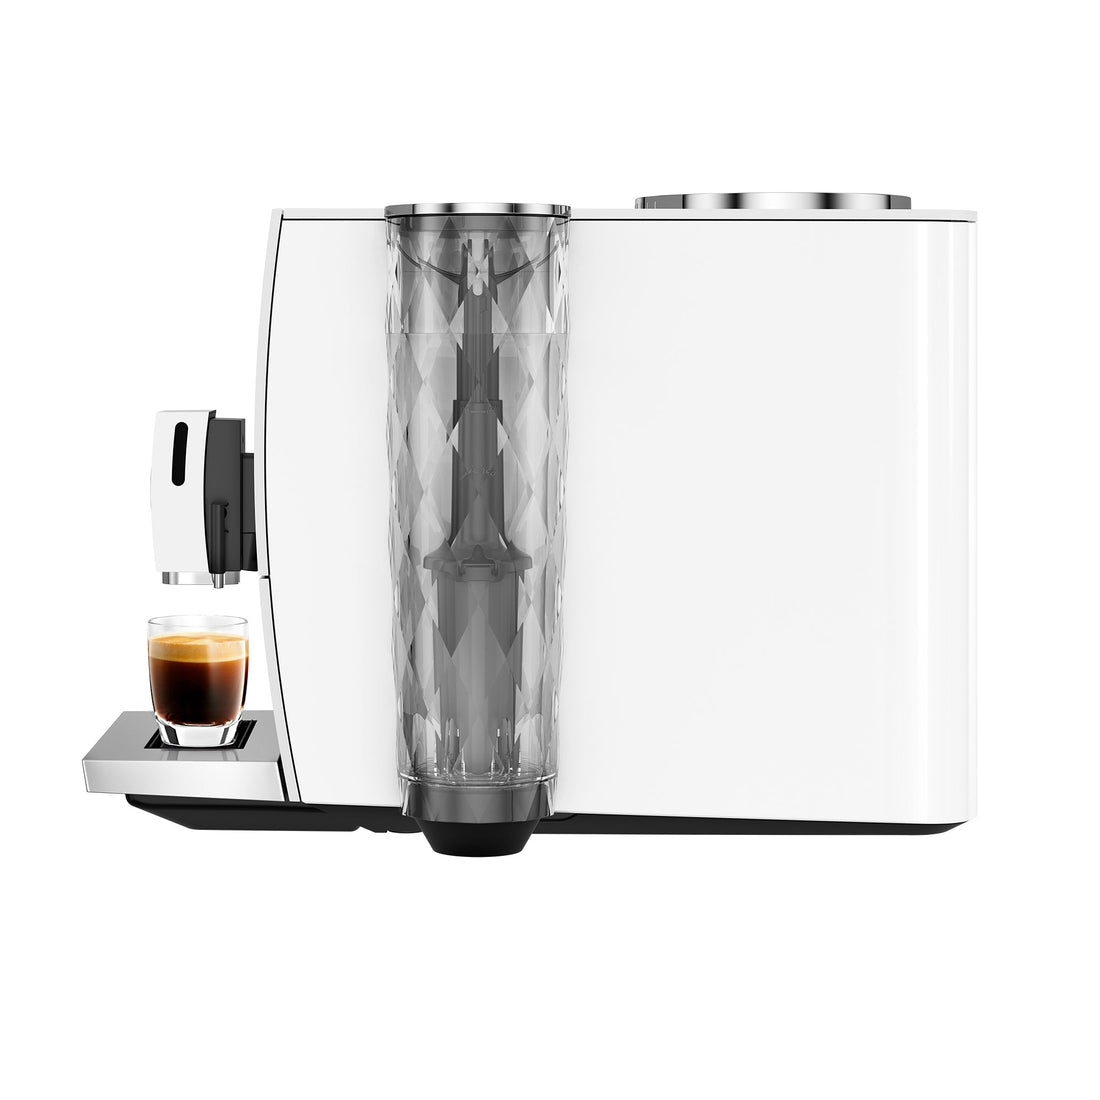 JURA ENA 8 Espresso Machine - Full Nordic White